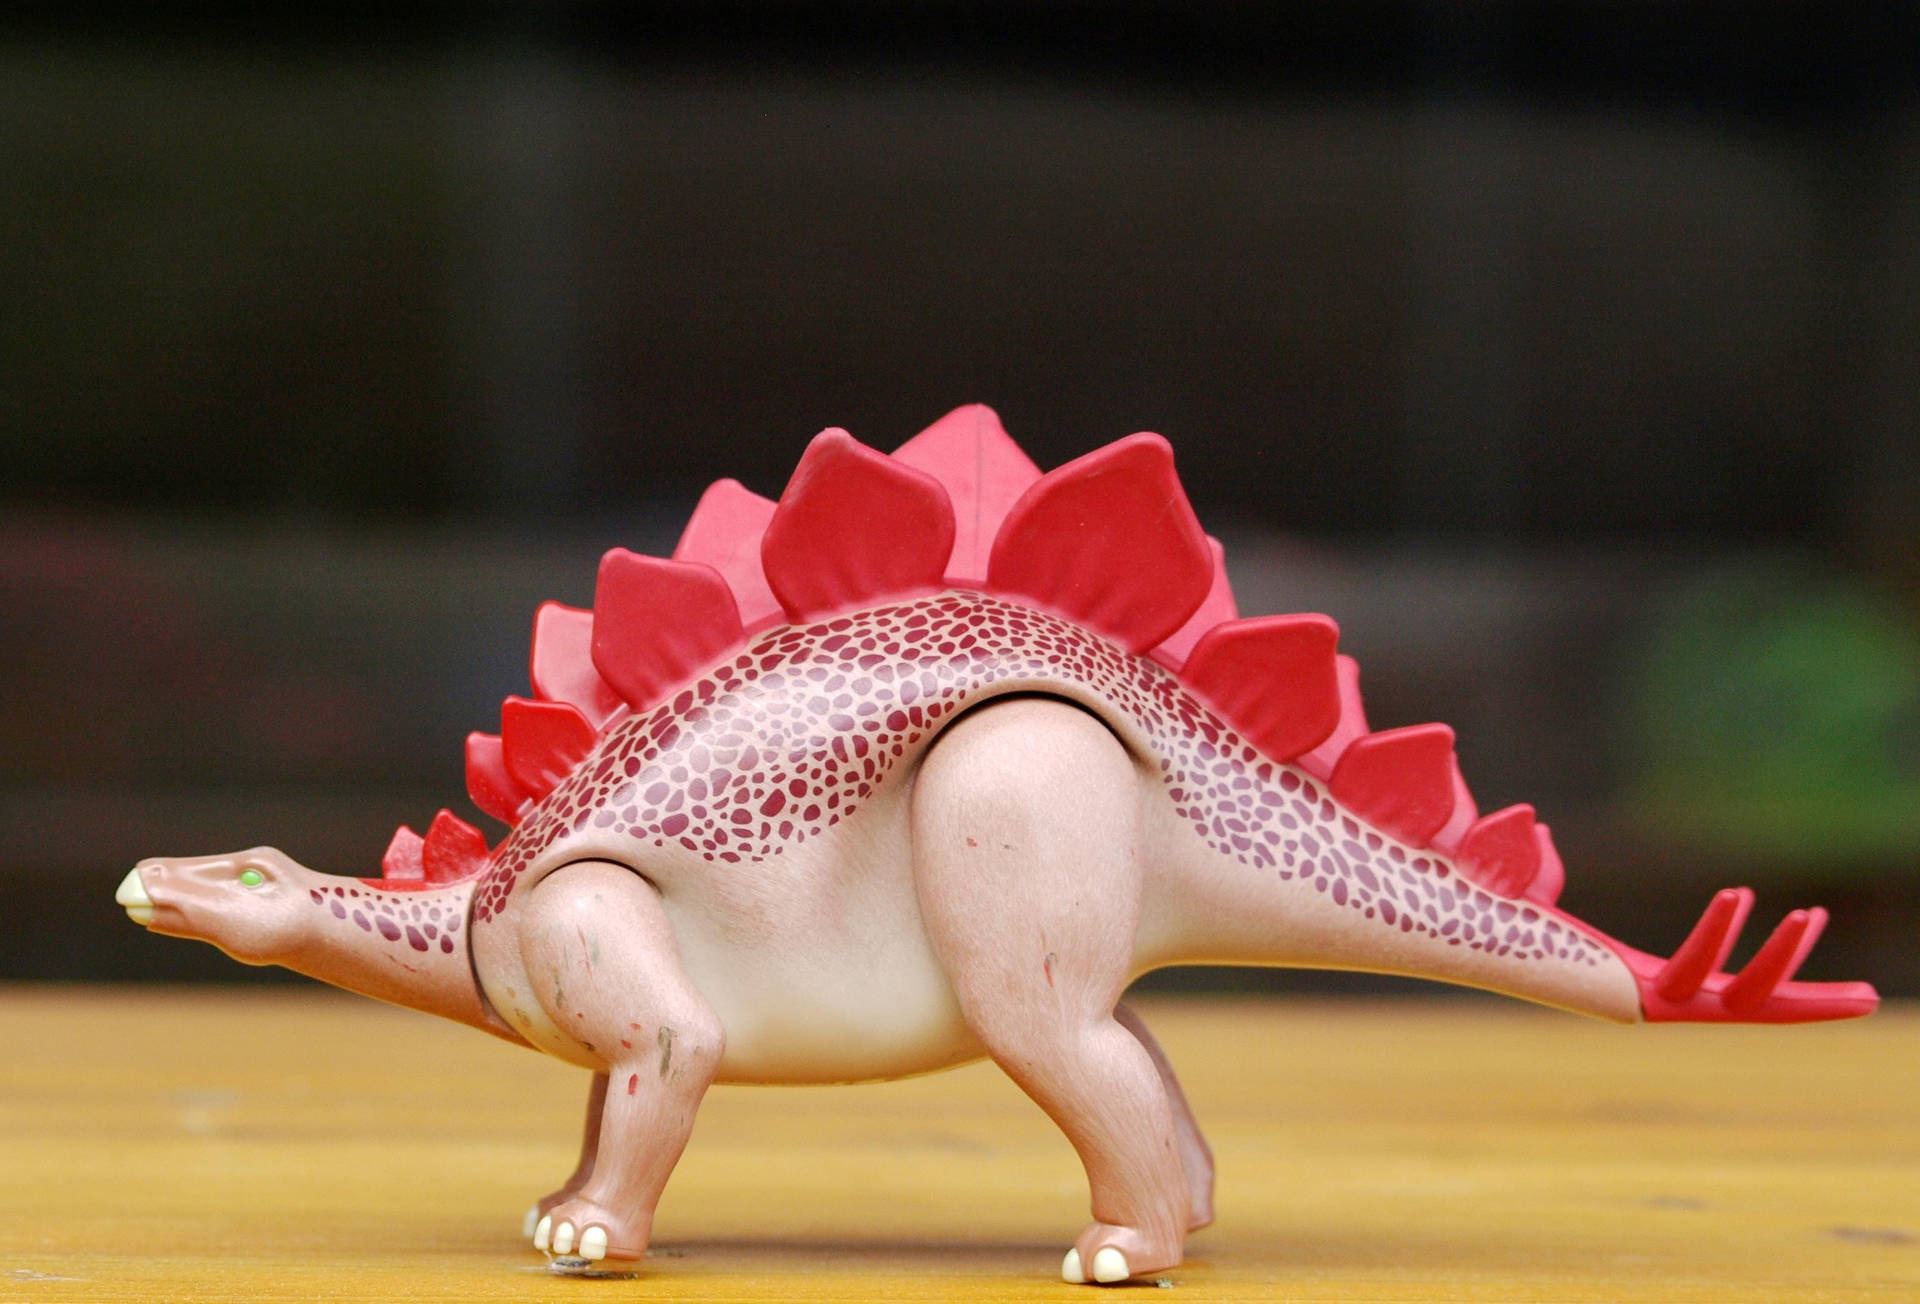 Cute Pink Dinosaur Stegosaurus Toy